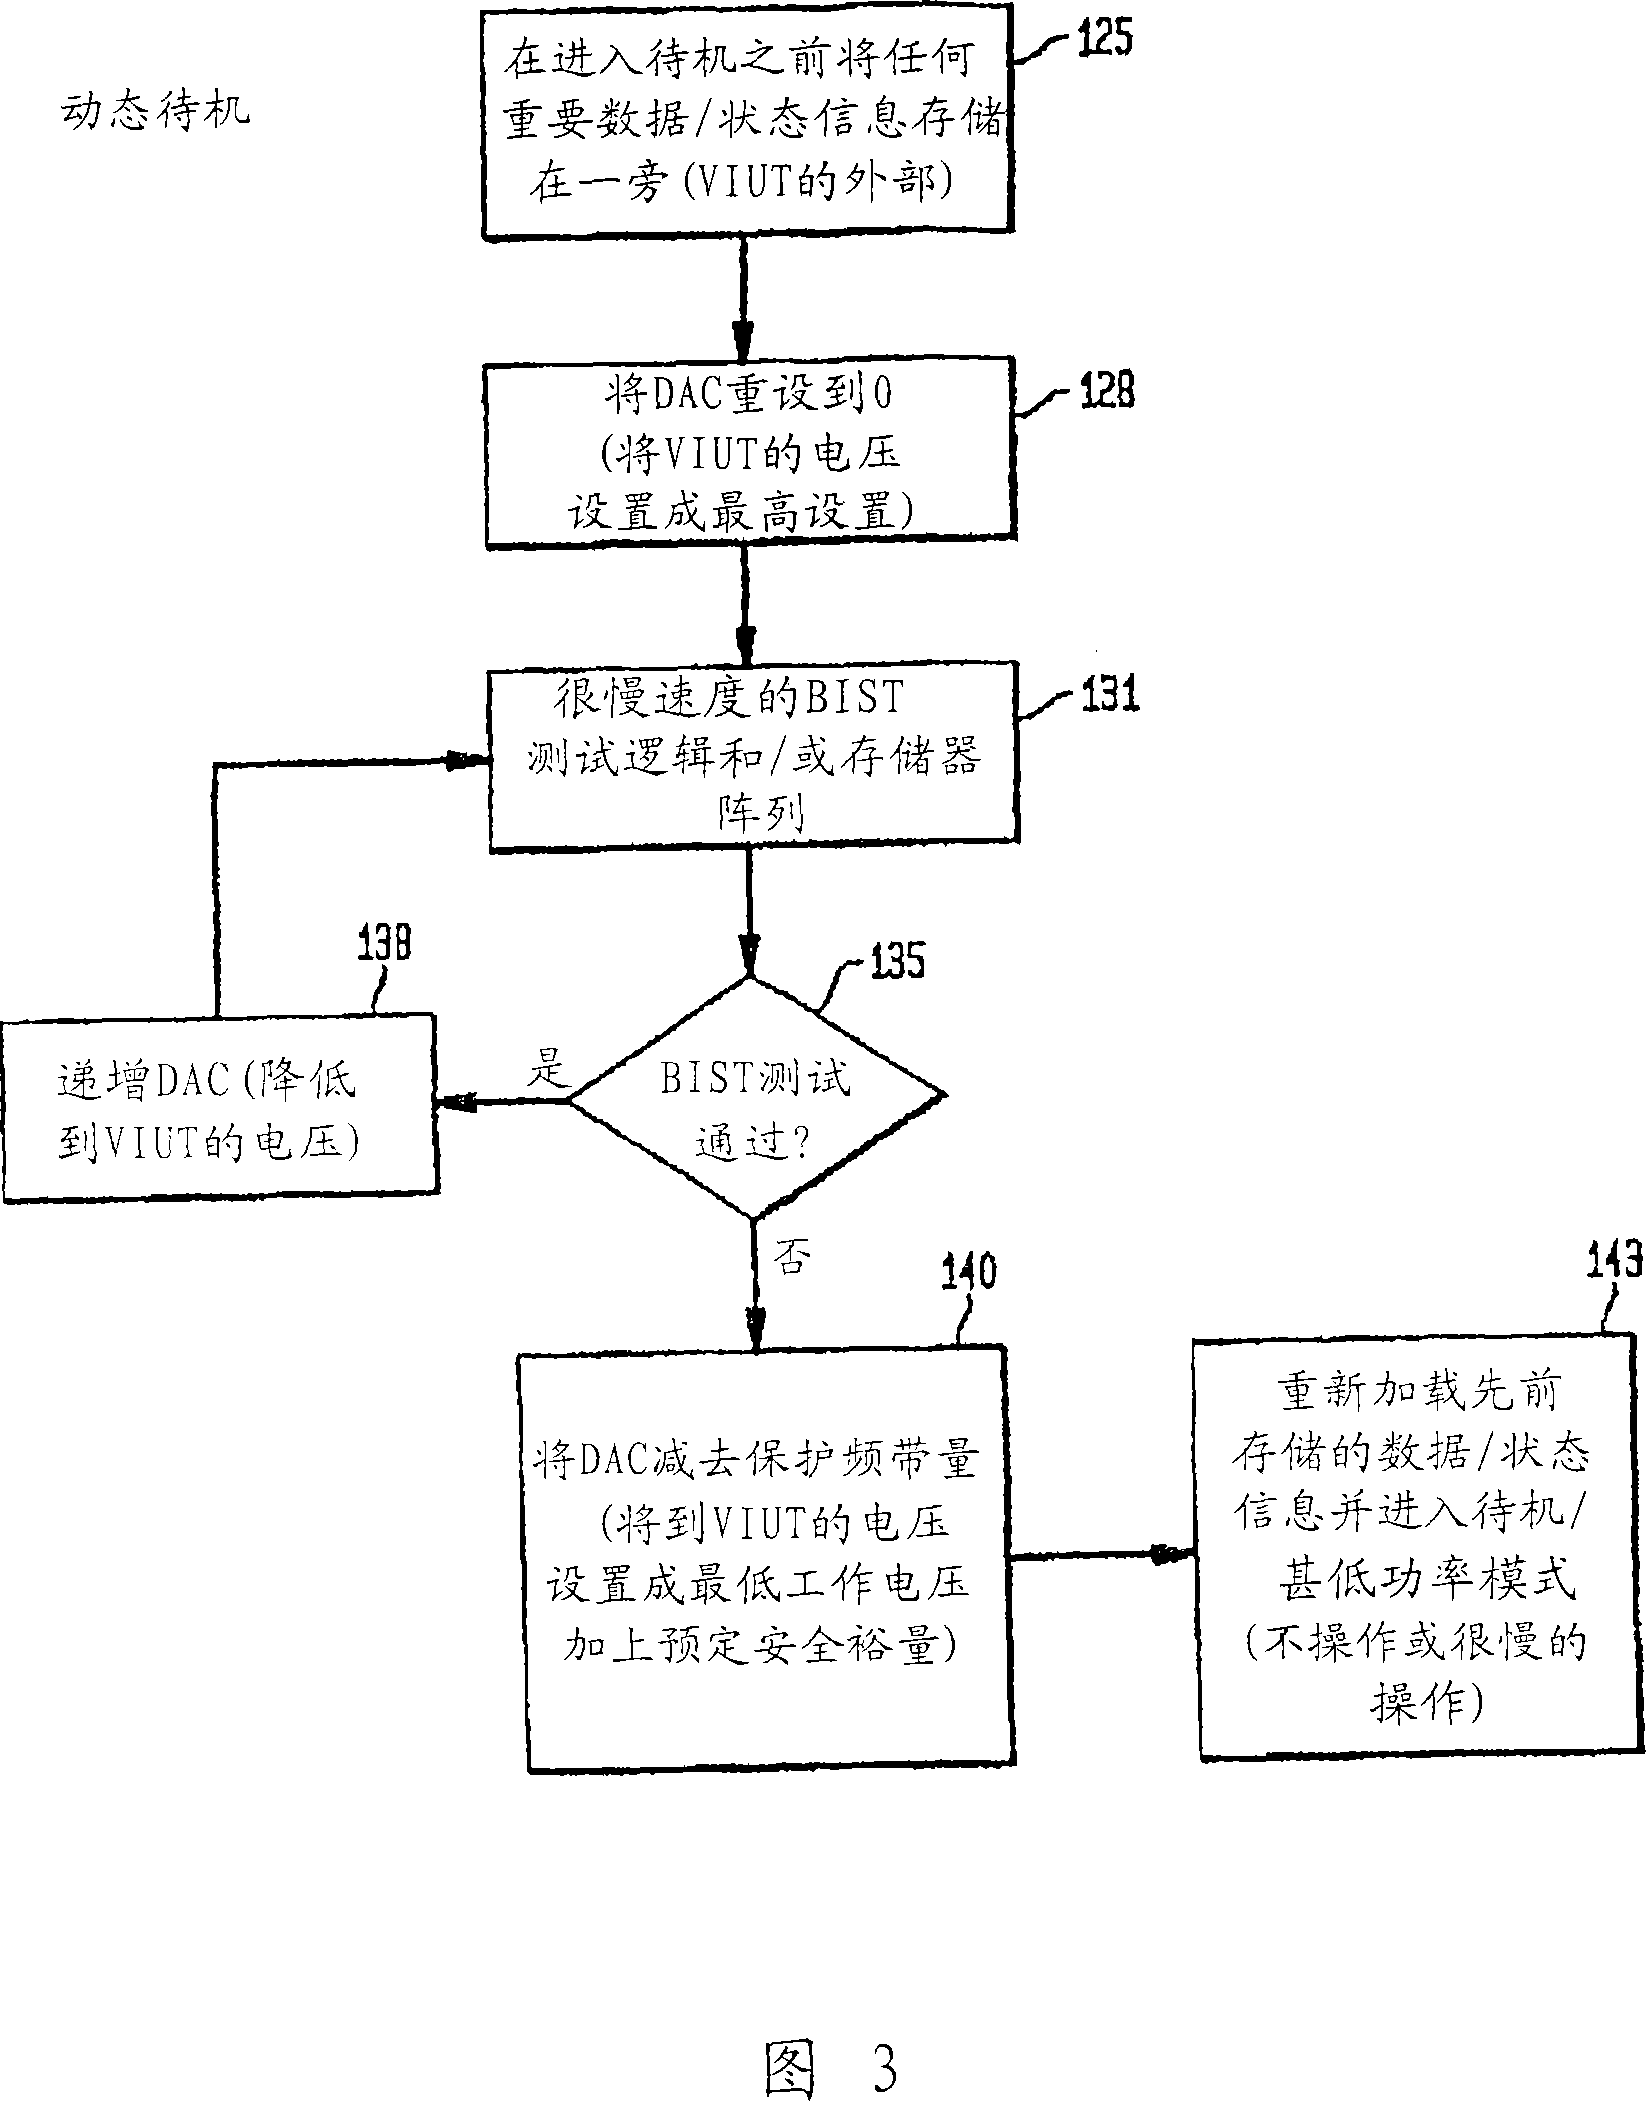 Self-test circuitry to determine minimum operating voltage